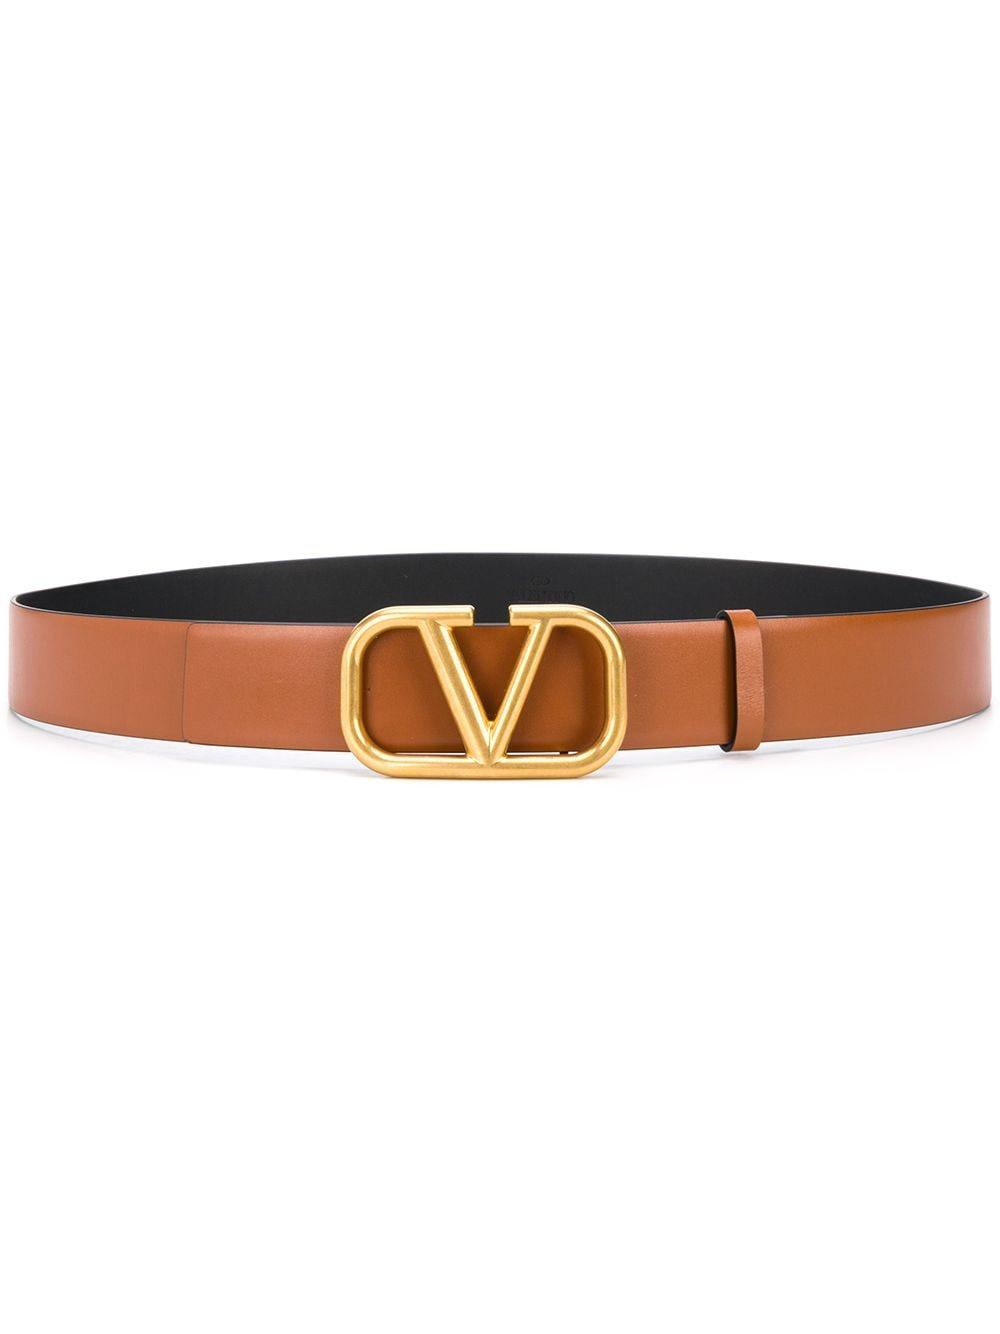 Valentino Garavani Leather Vlogo Belt in Brown for Men - Lyst